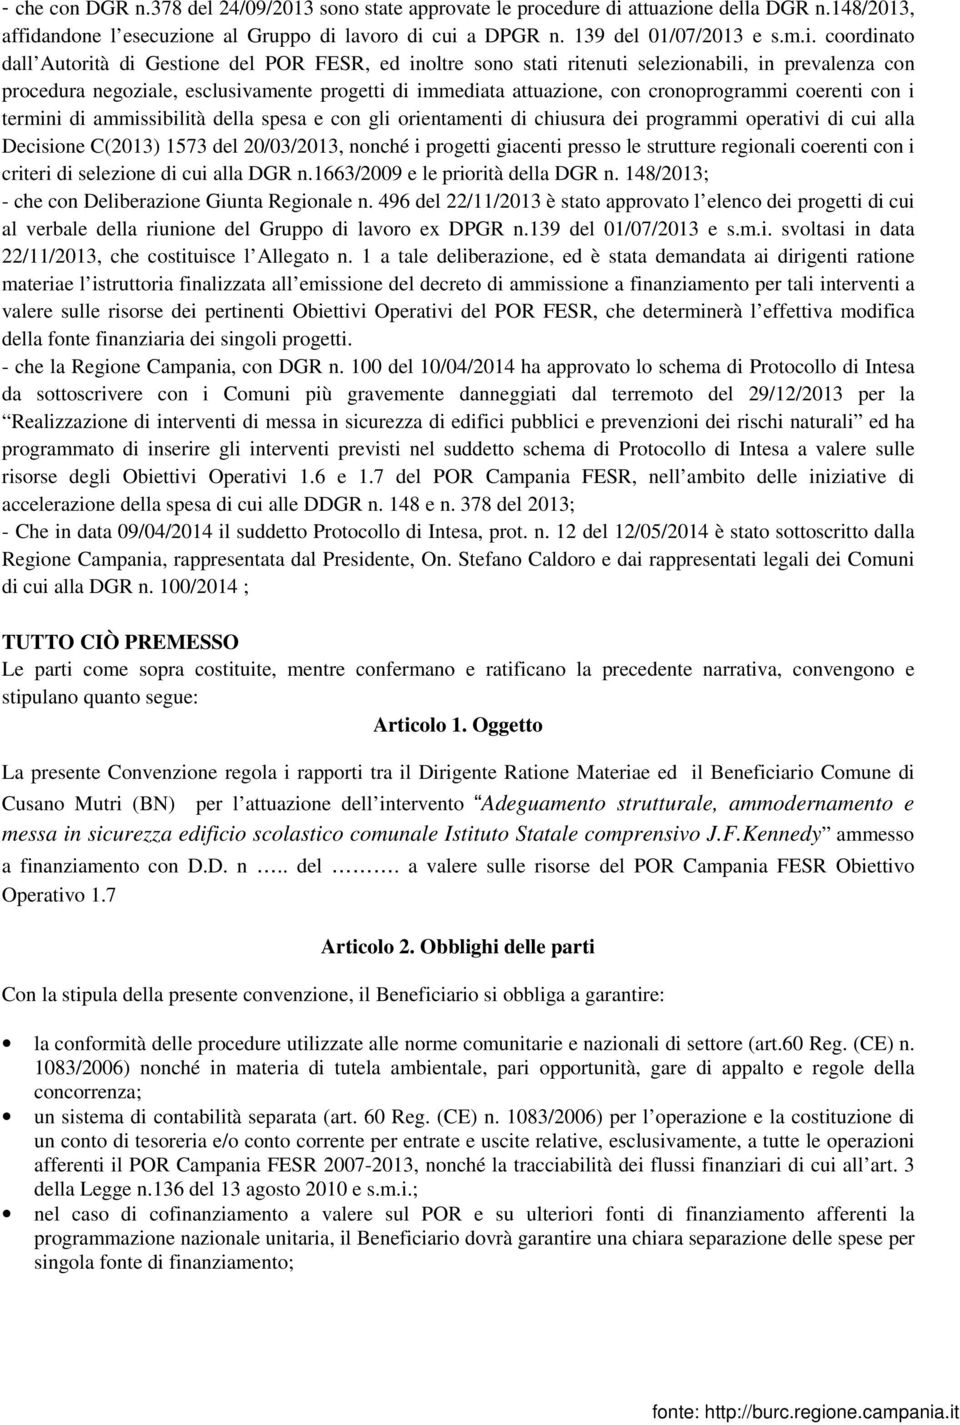 ne della DGR n.148/2013, affid